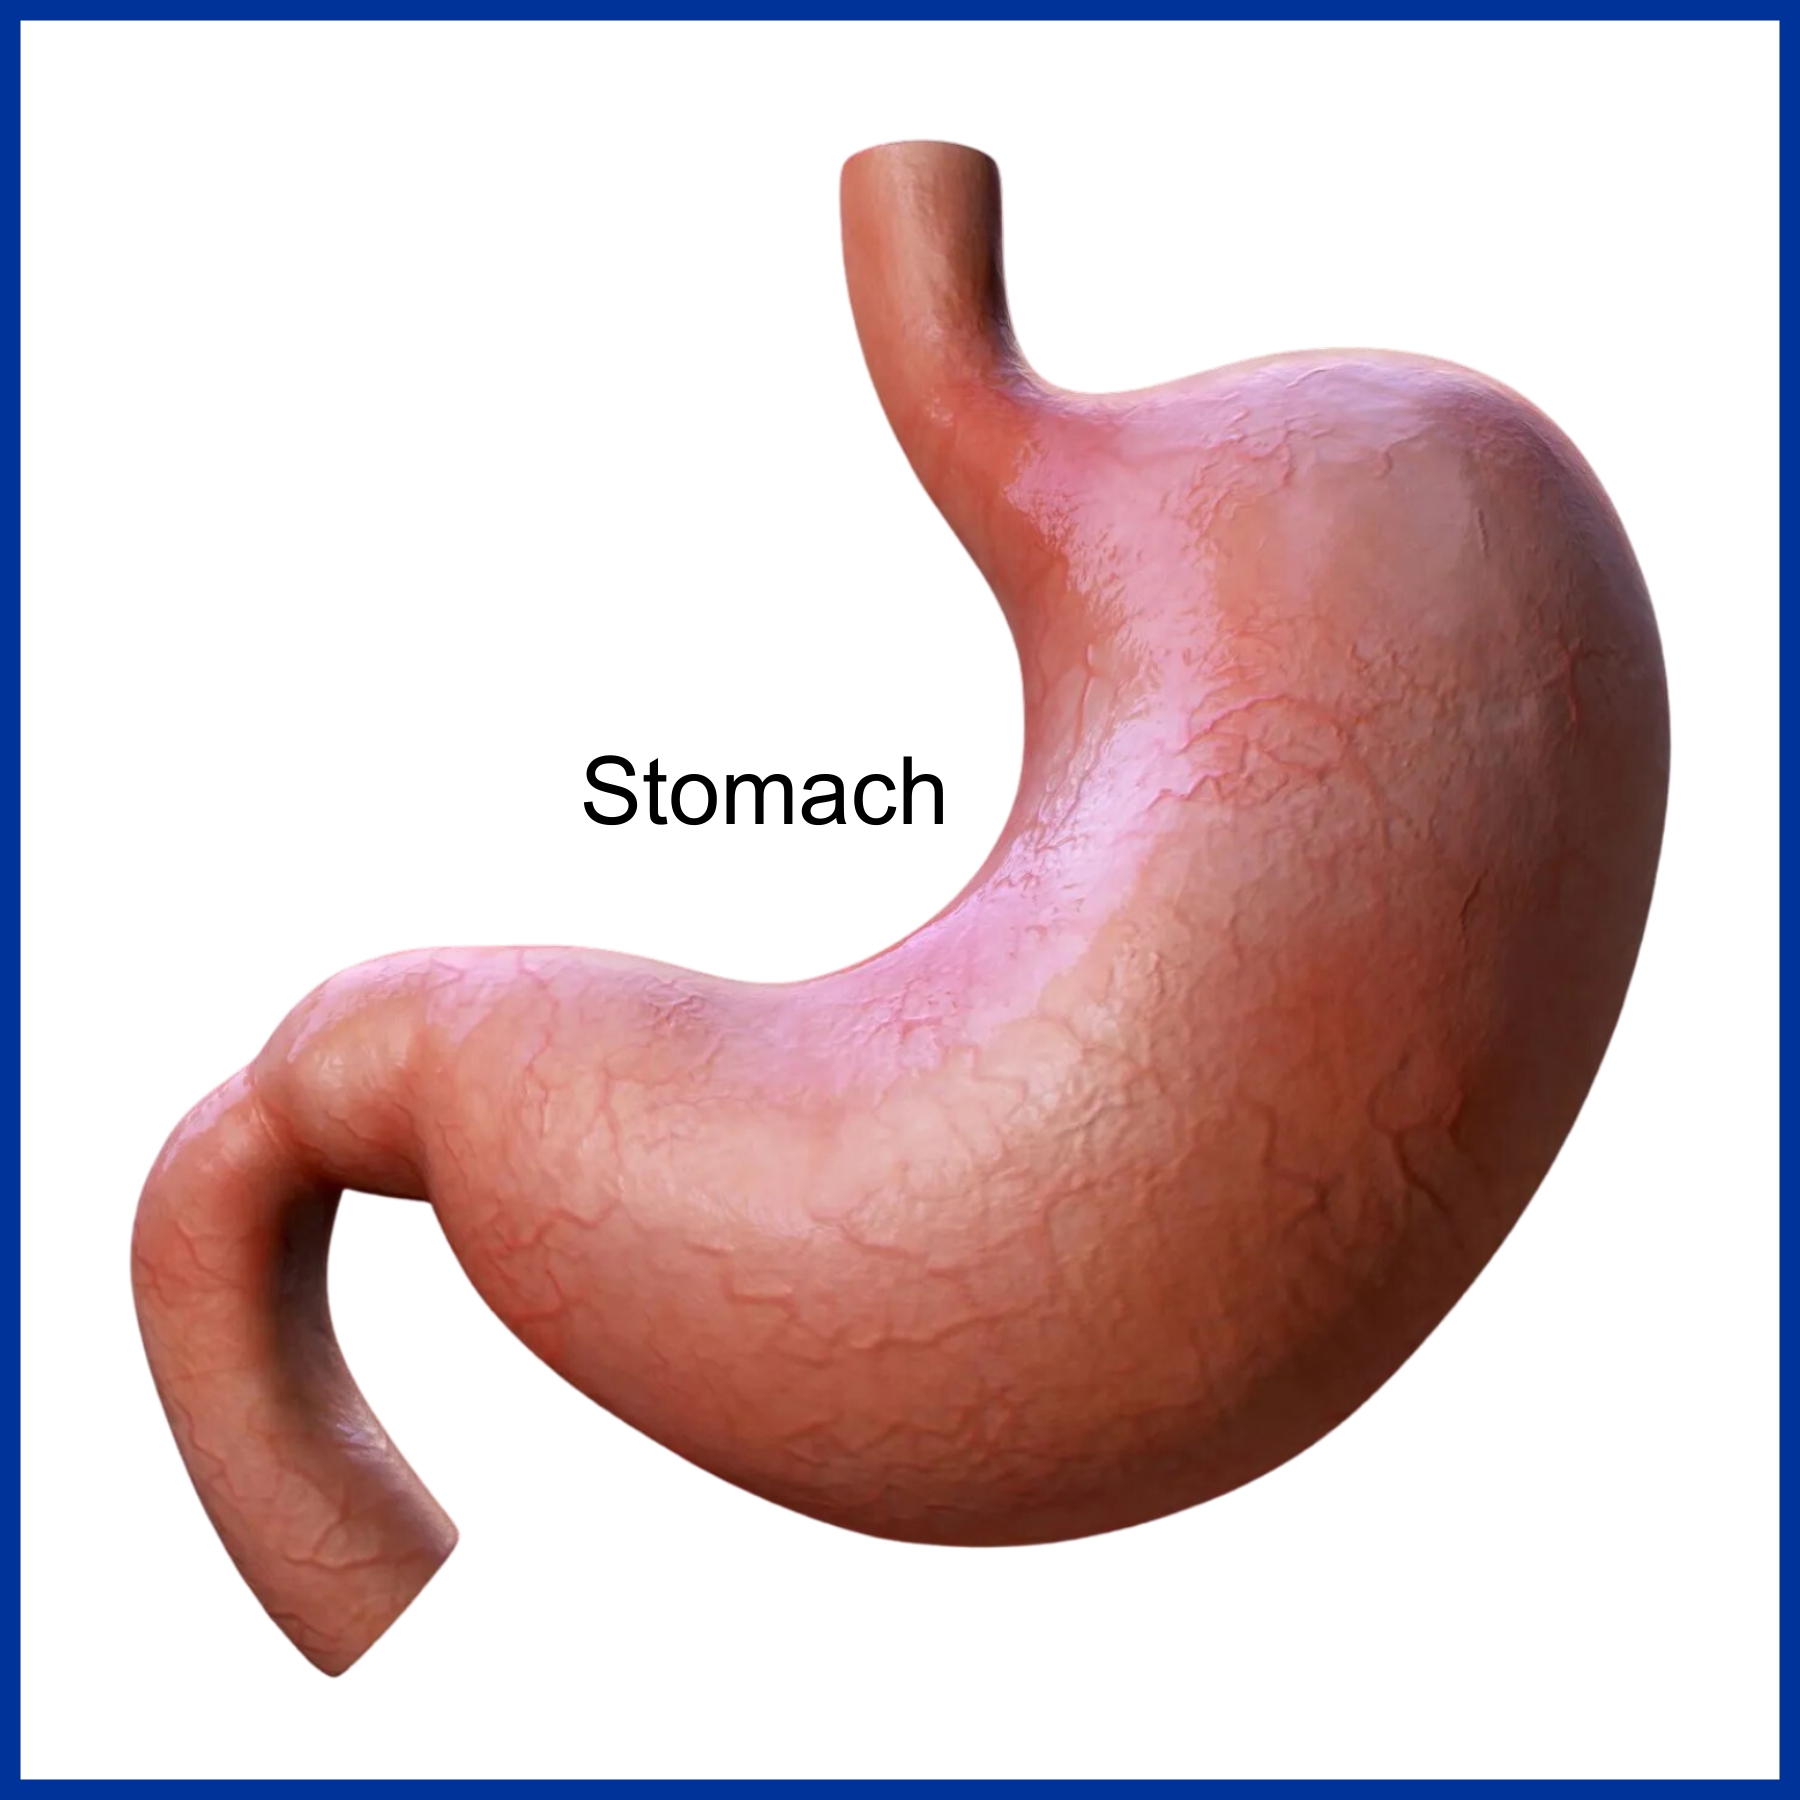 Stomach Disease